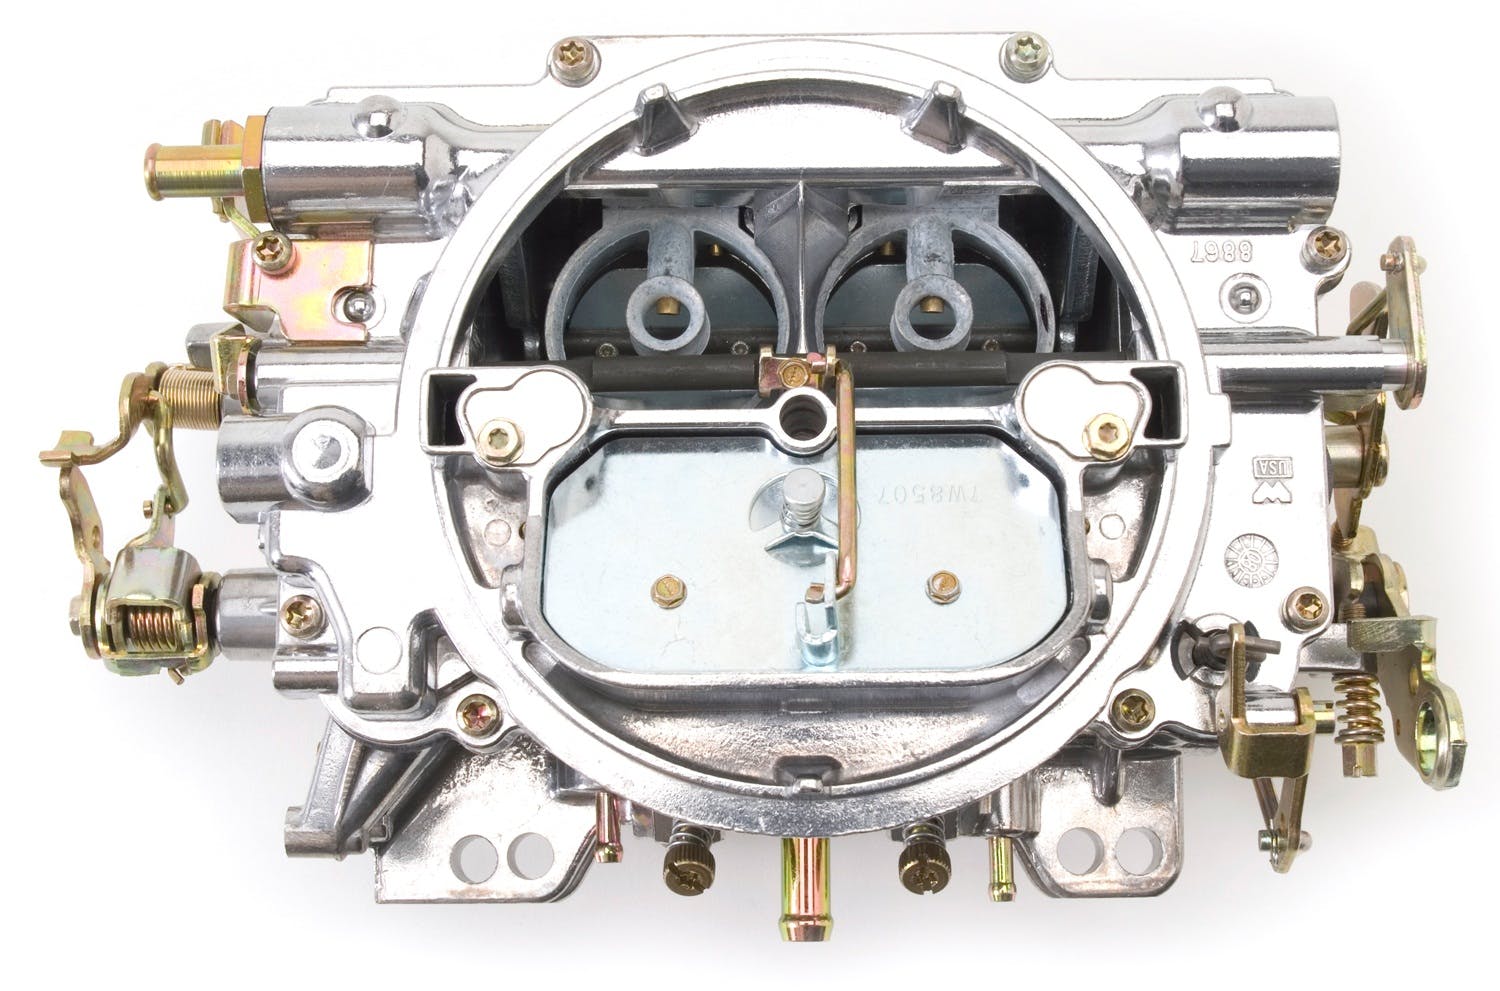 Edelbrock 1404 Performer Series 500 CFM Carburetor with Manual Choke in Satin (non-EGR)